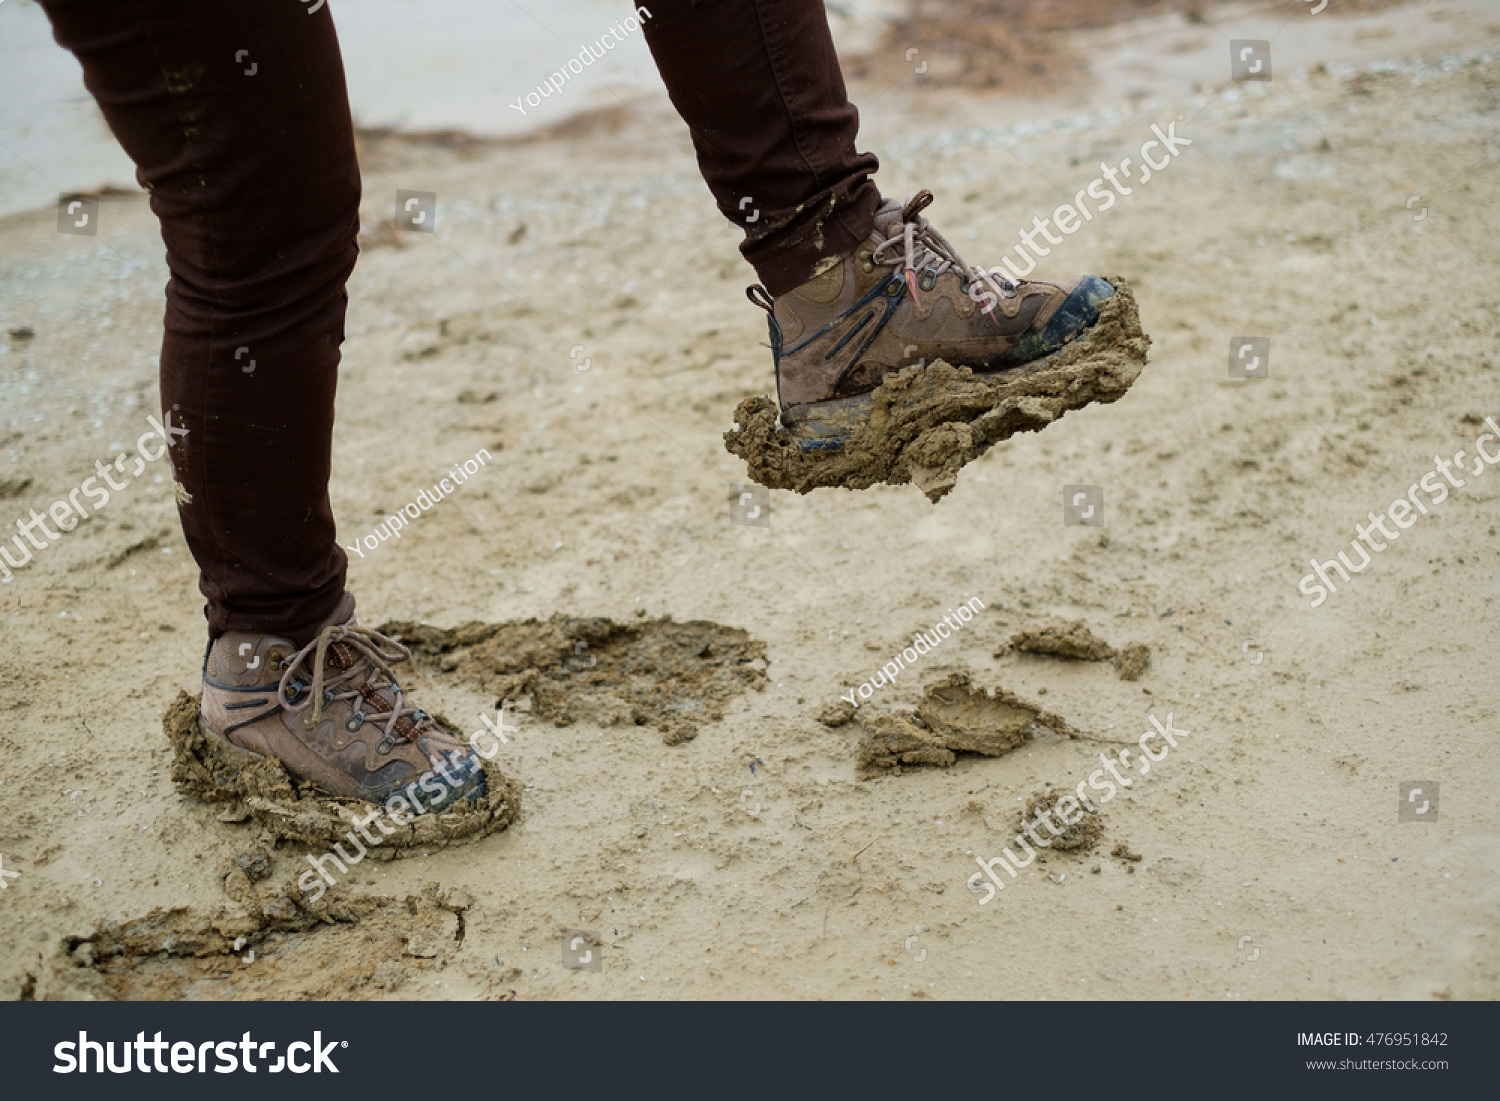 mud walking boots